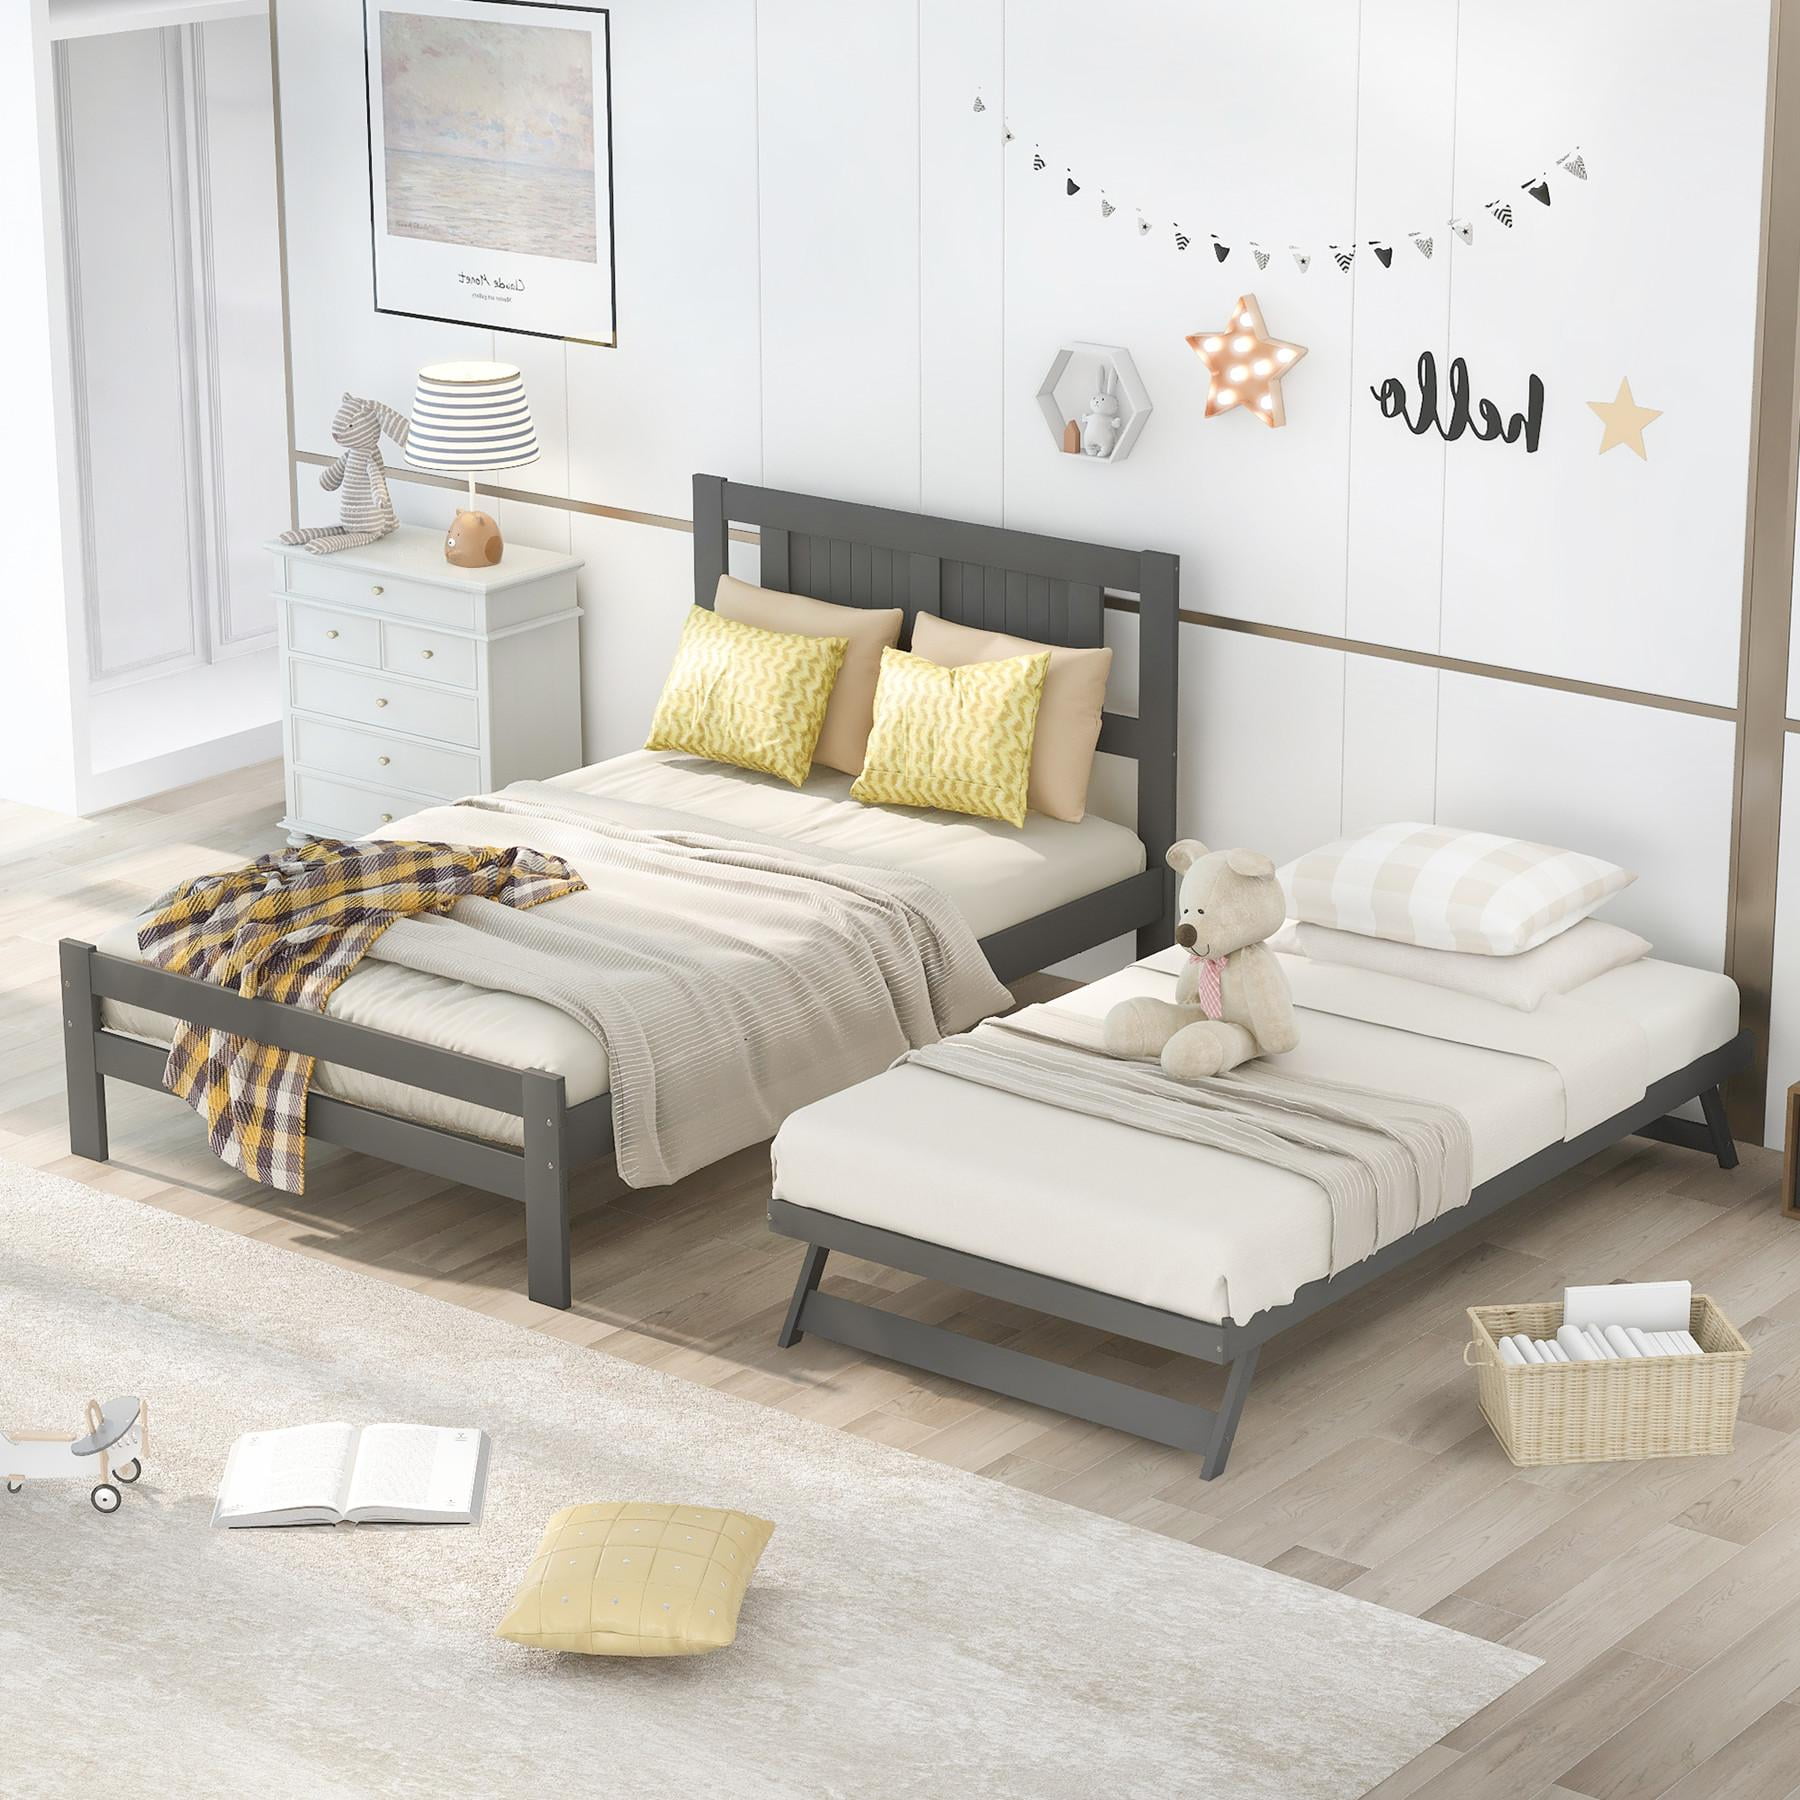 Platform Bed Frame Full Size, Wooden Bed with Adjustable Trundle and